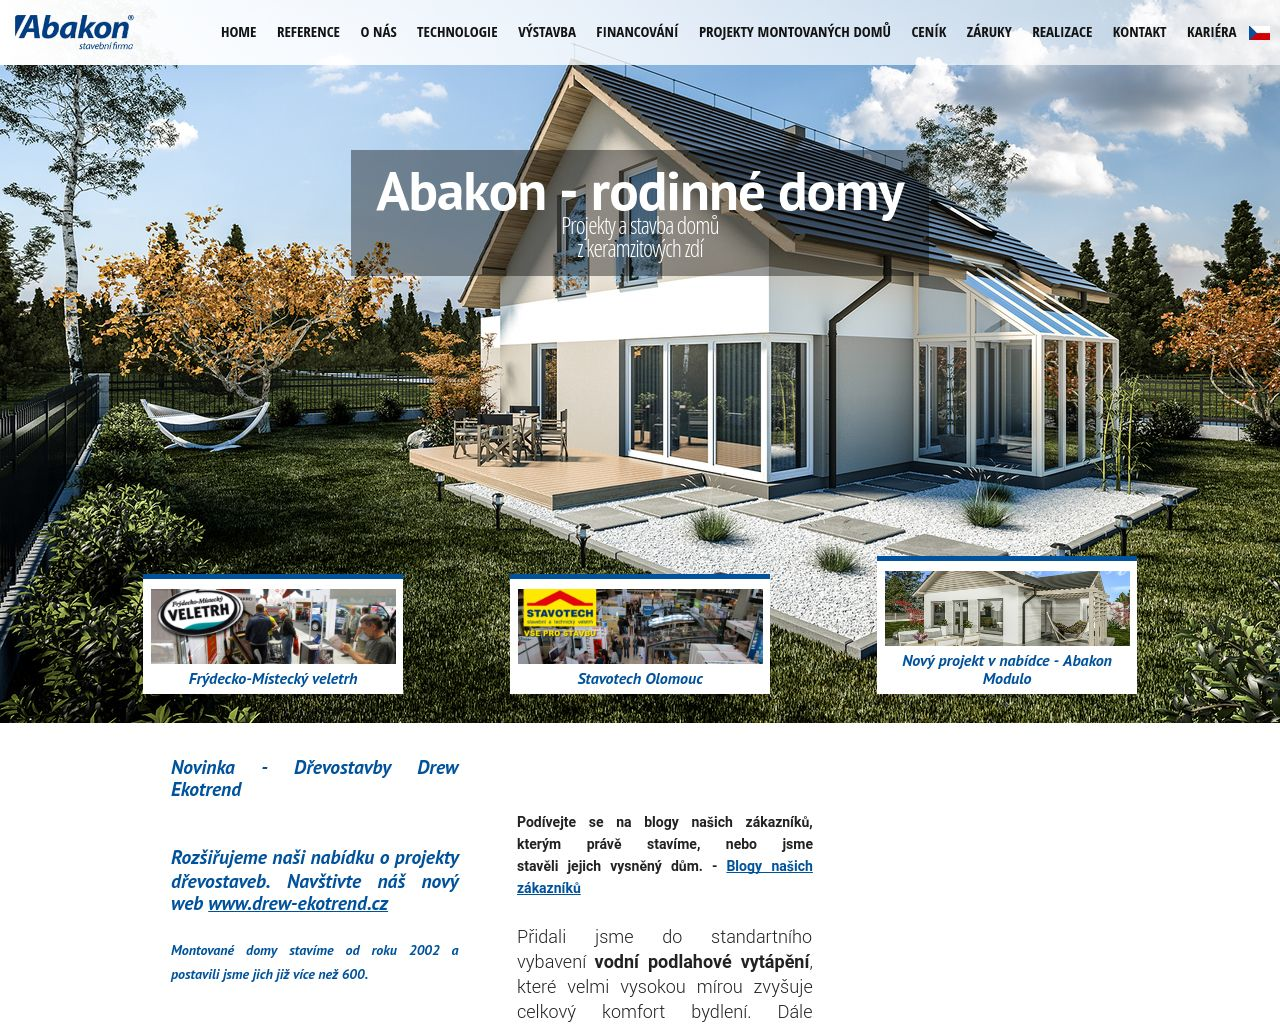 Site Image abakon.cz v 1280x1024